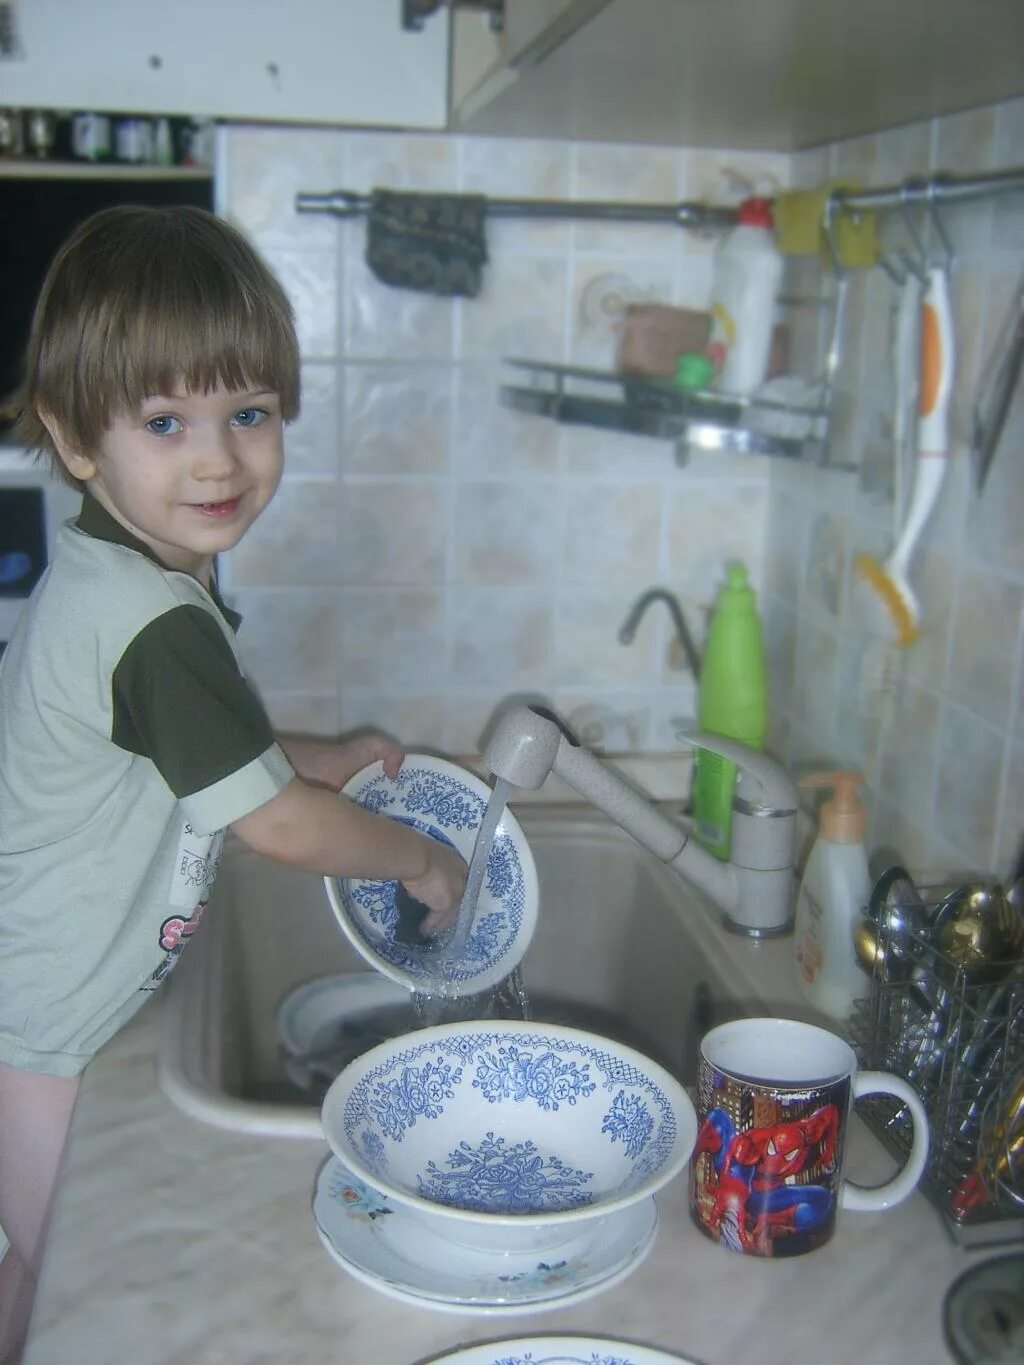 Мытье посуды. Мамина помощница. Мамин помощник мытье посуды. Мальчик моет посуду